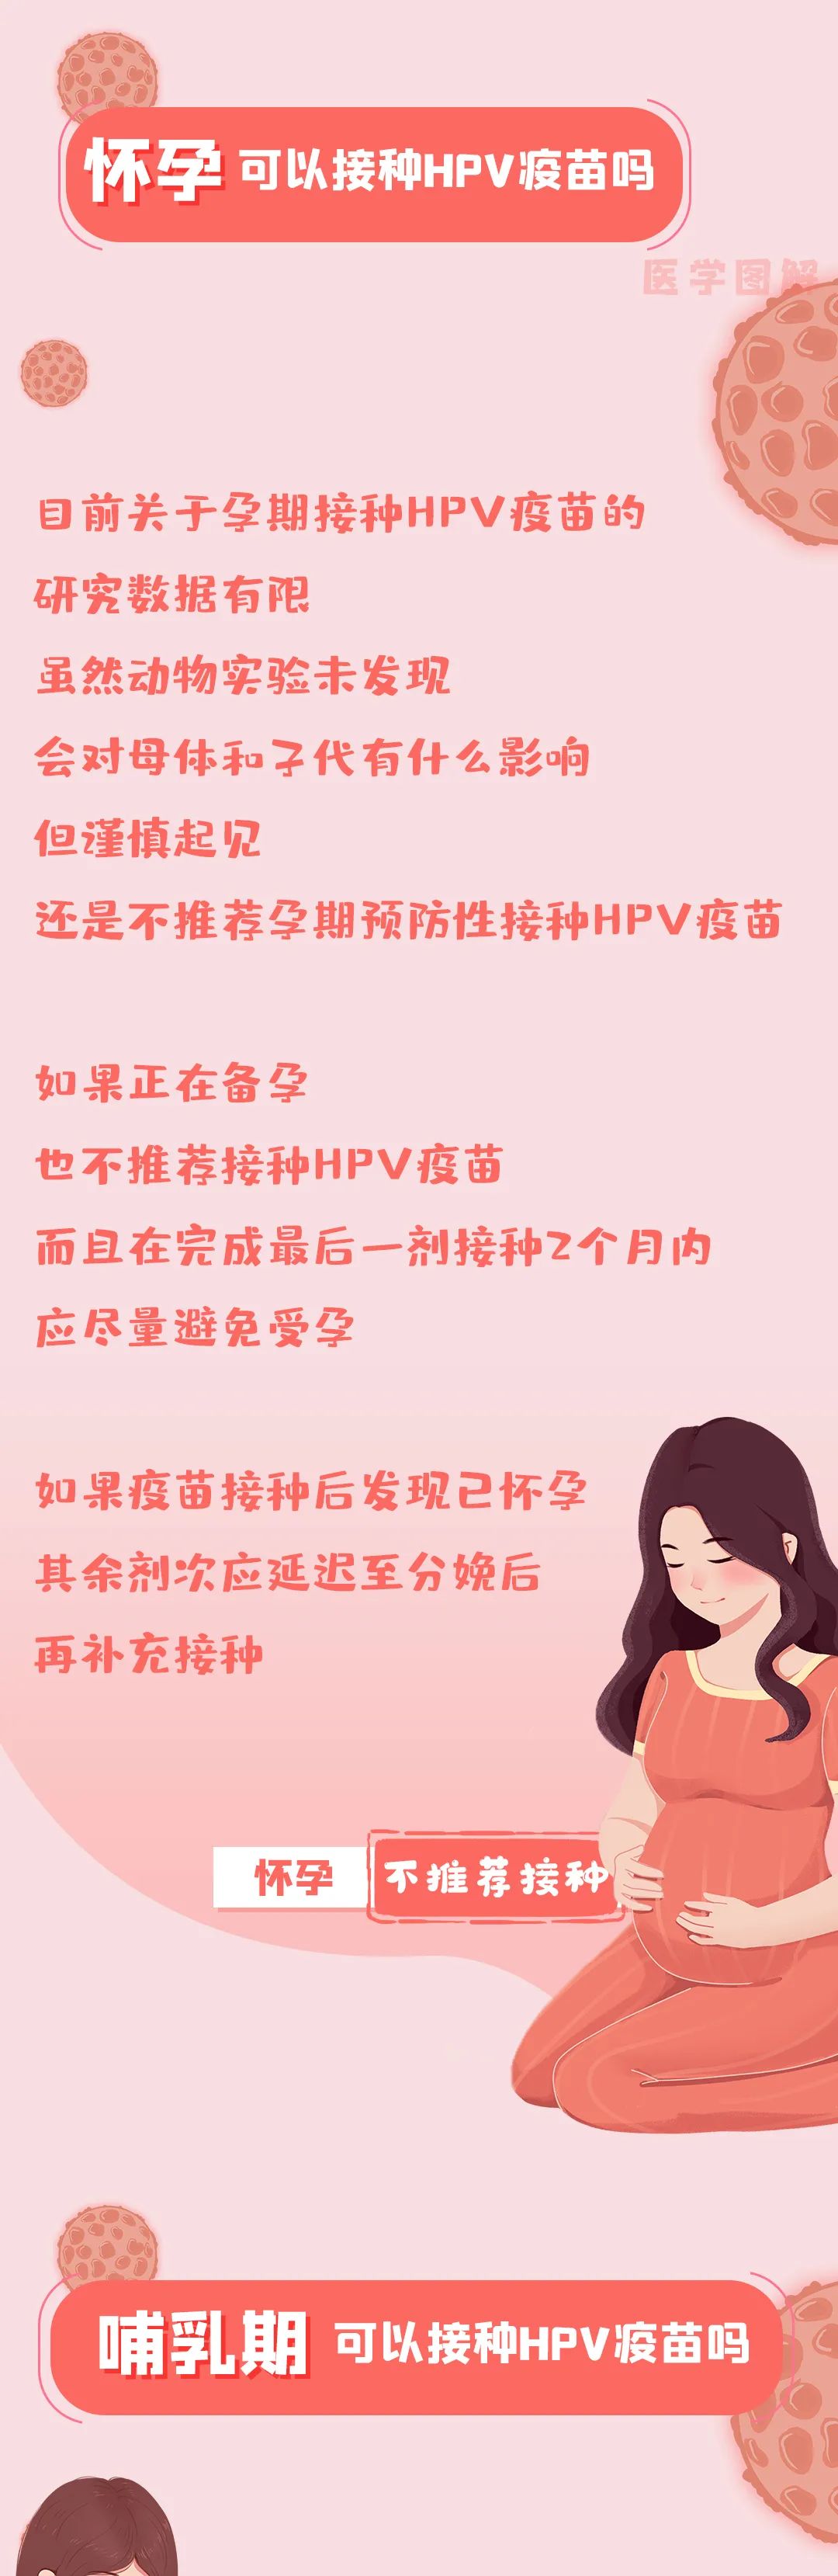 HPV分型检测 - 北京华大吉比爱生物技术有限公司